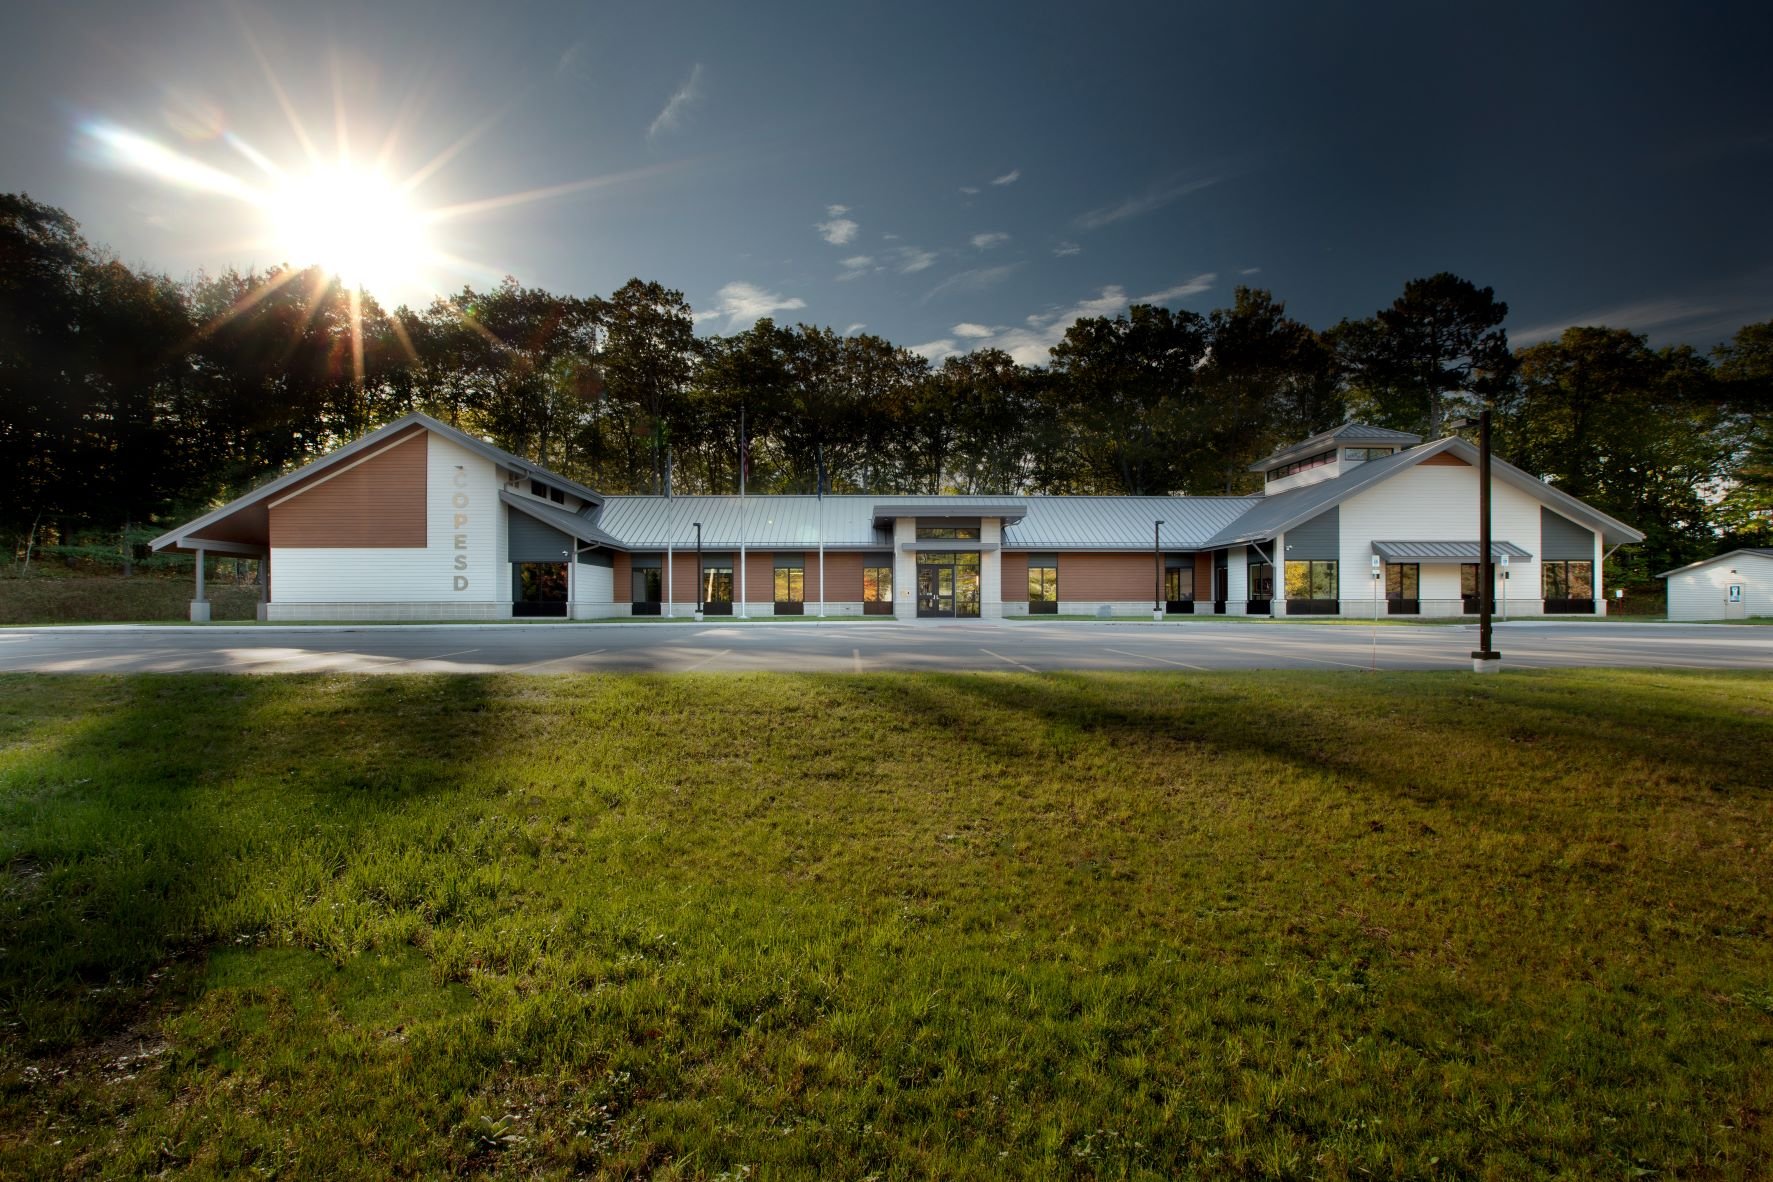 Administration Building at Cheboygan Otsego Presque Isle Educational School District*